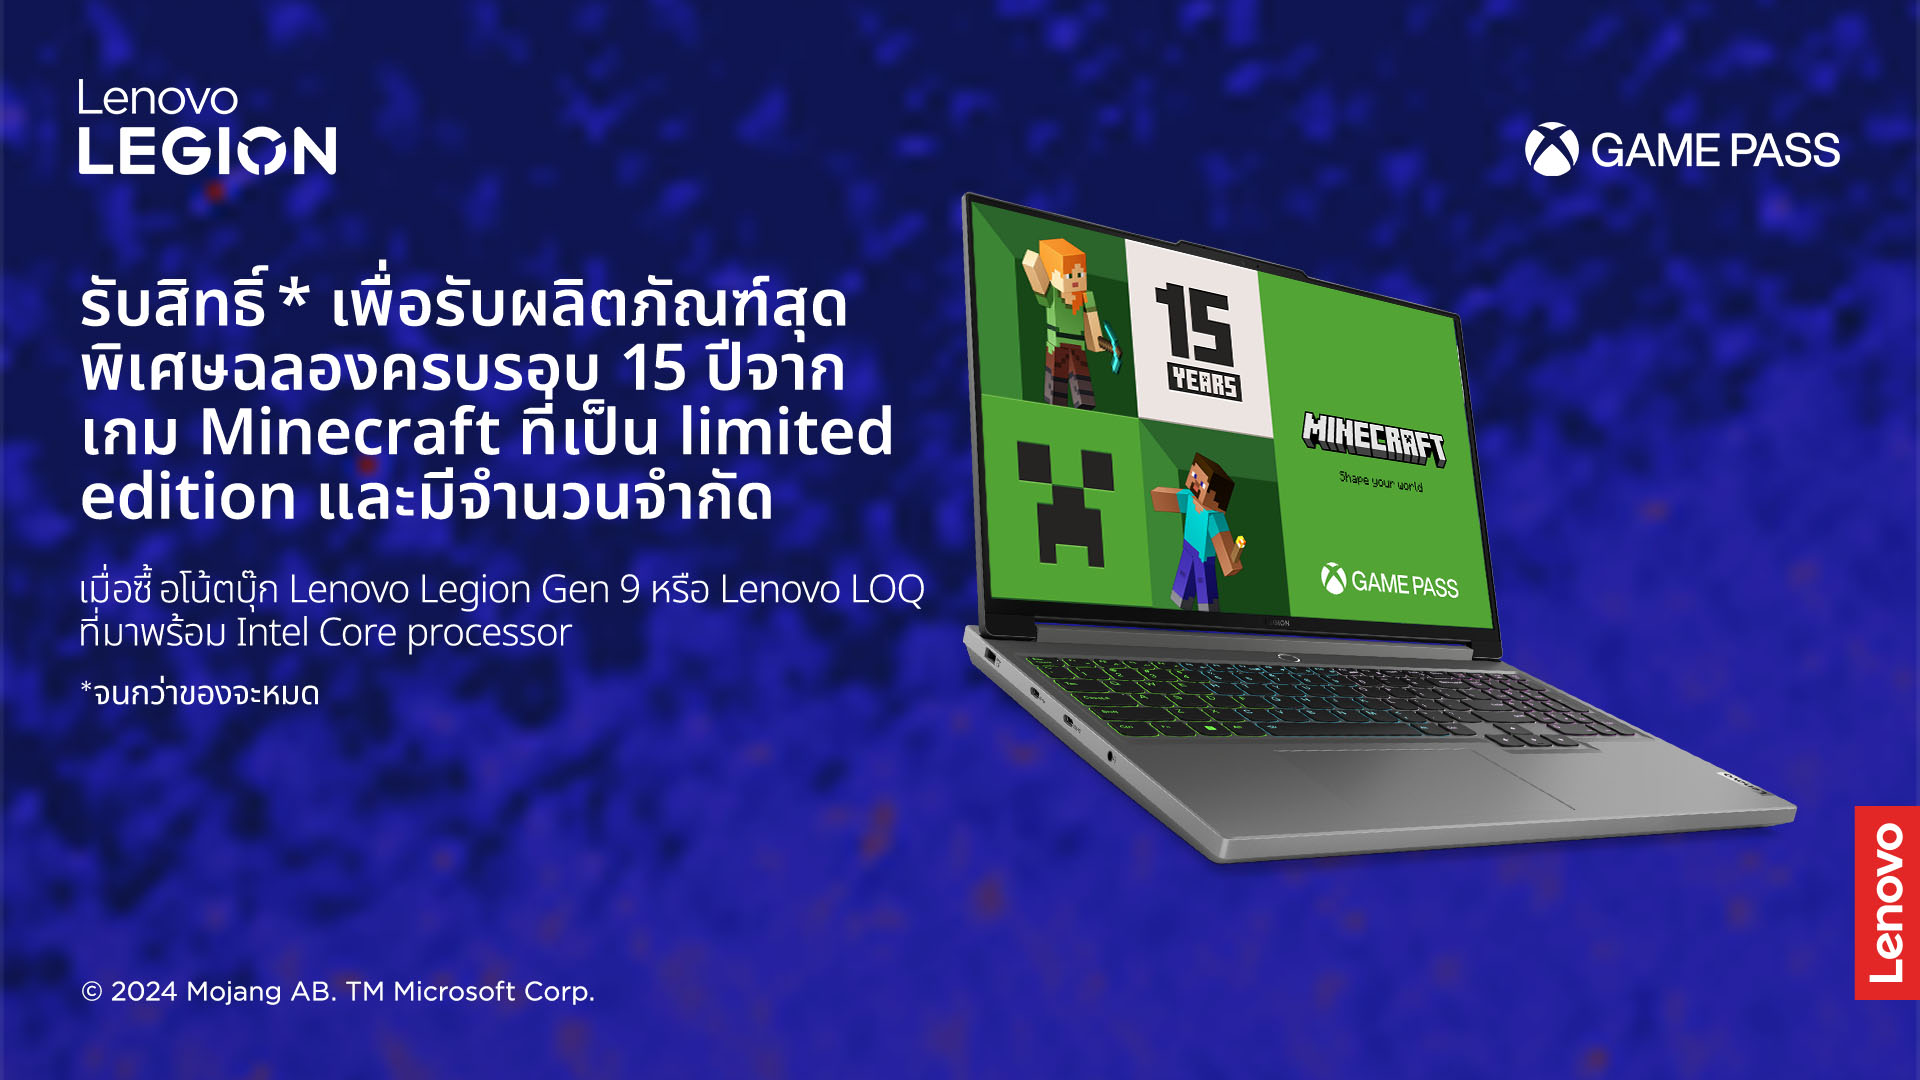 Lenovo and Minecraft 15 th Anniversary